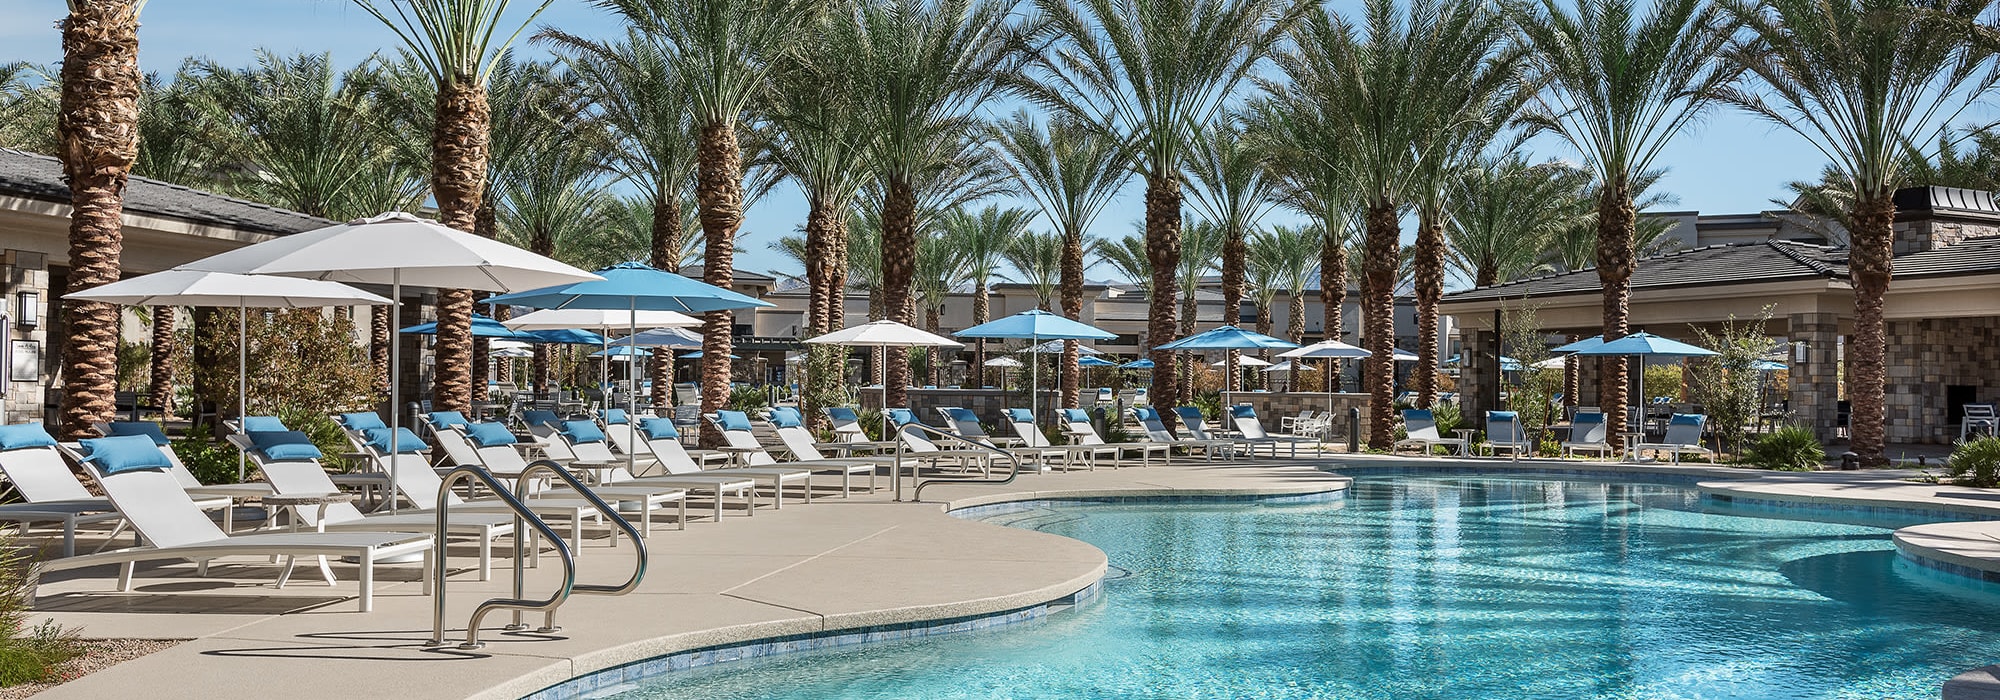 Welcoming pool area at San Artes in Scottsdale, Arizona